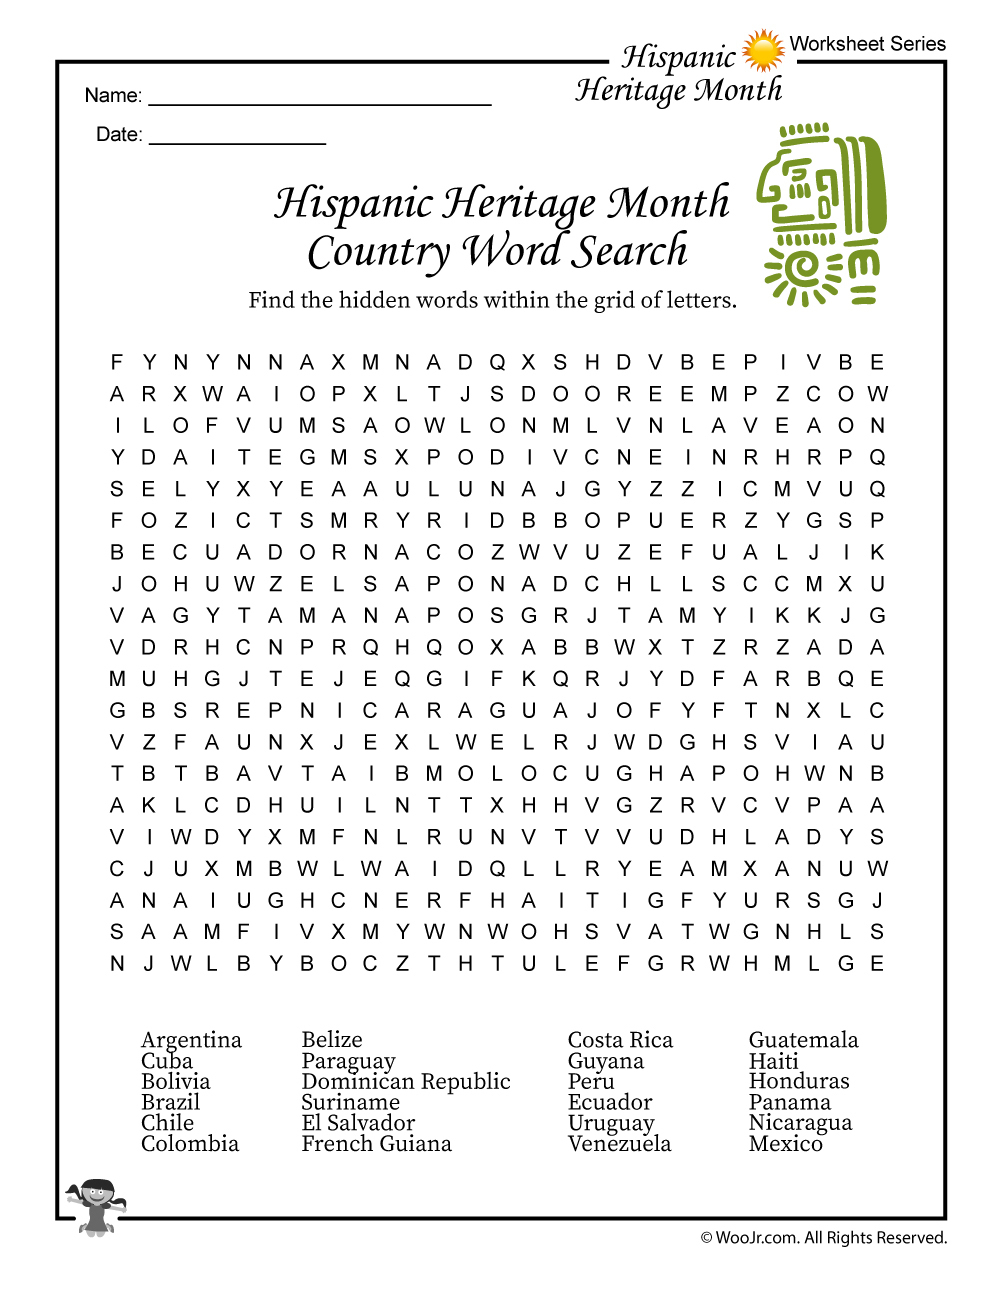 Hispanic Heritage Month Word Search Printable Word Search Printable